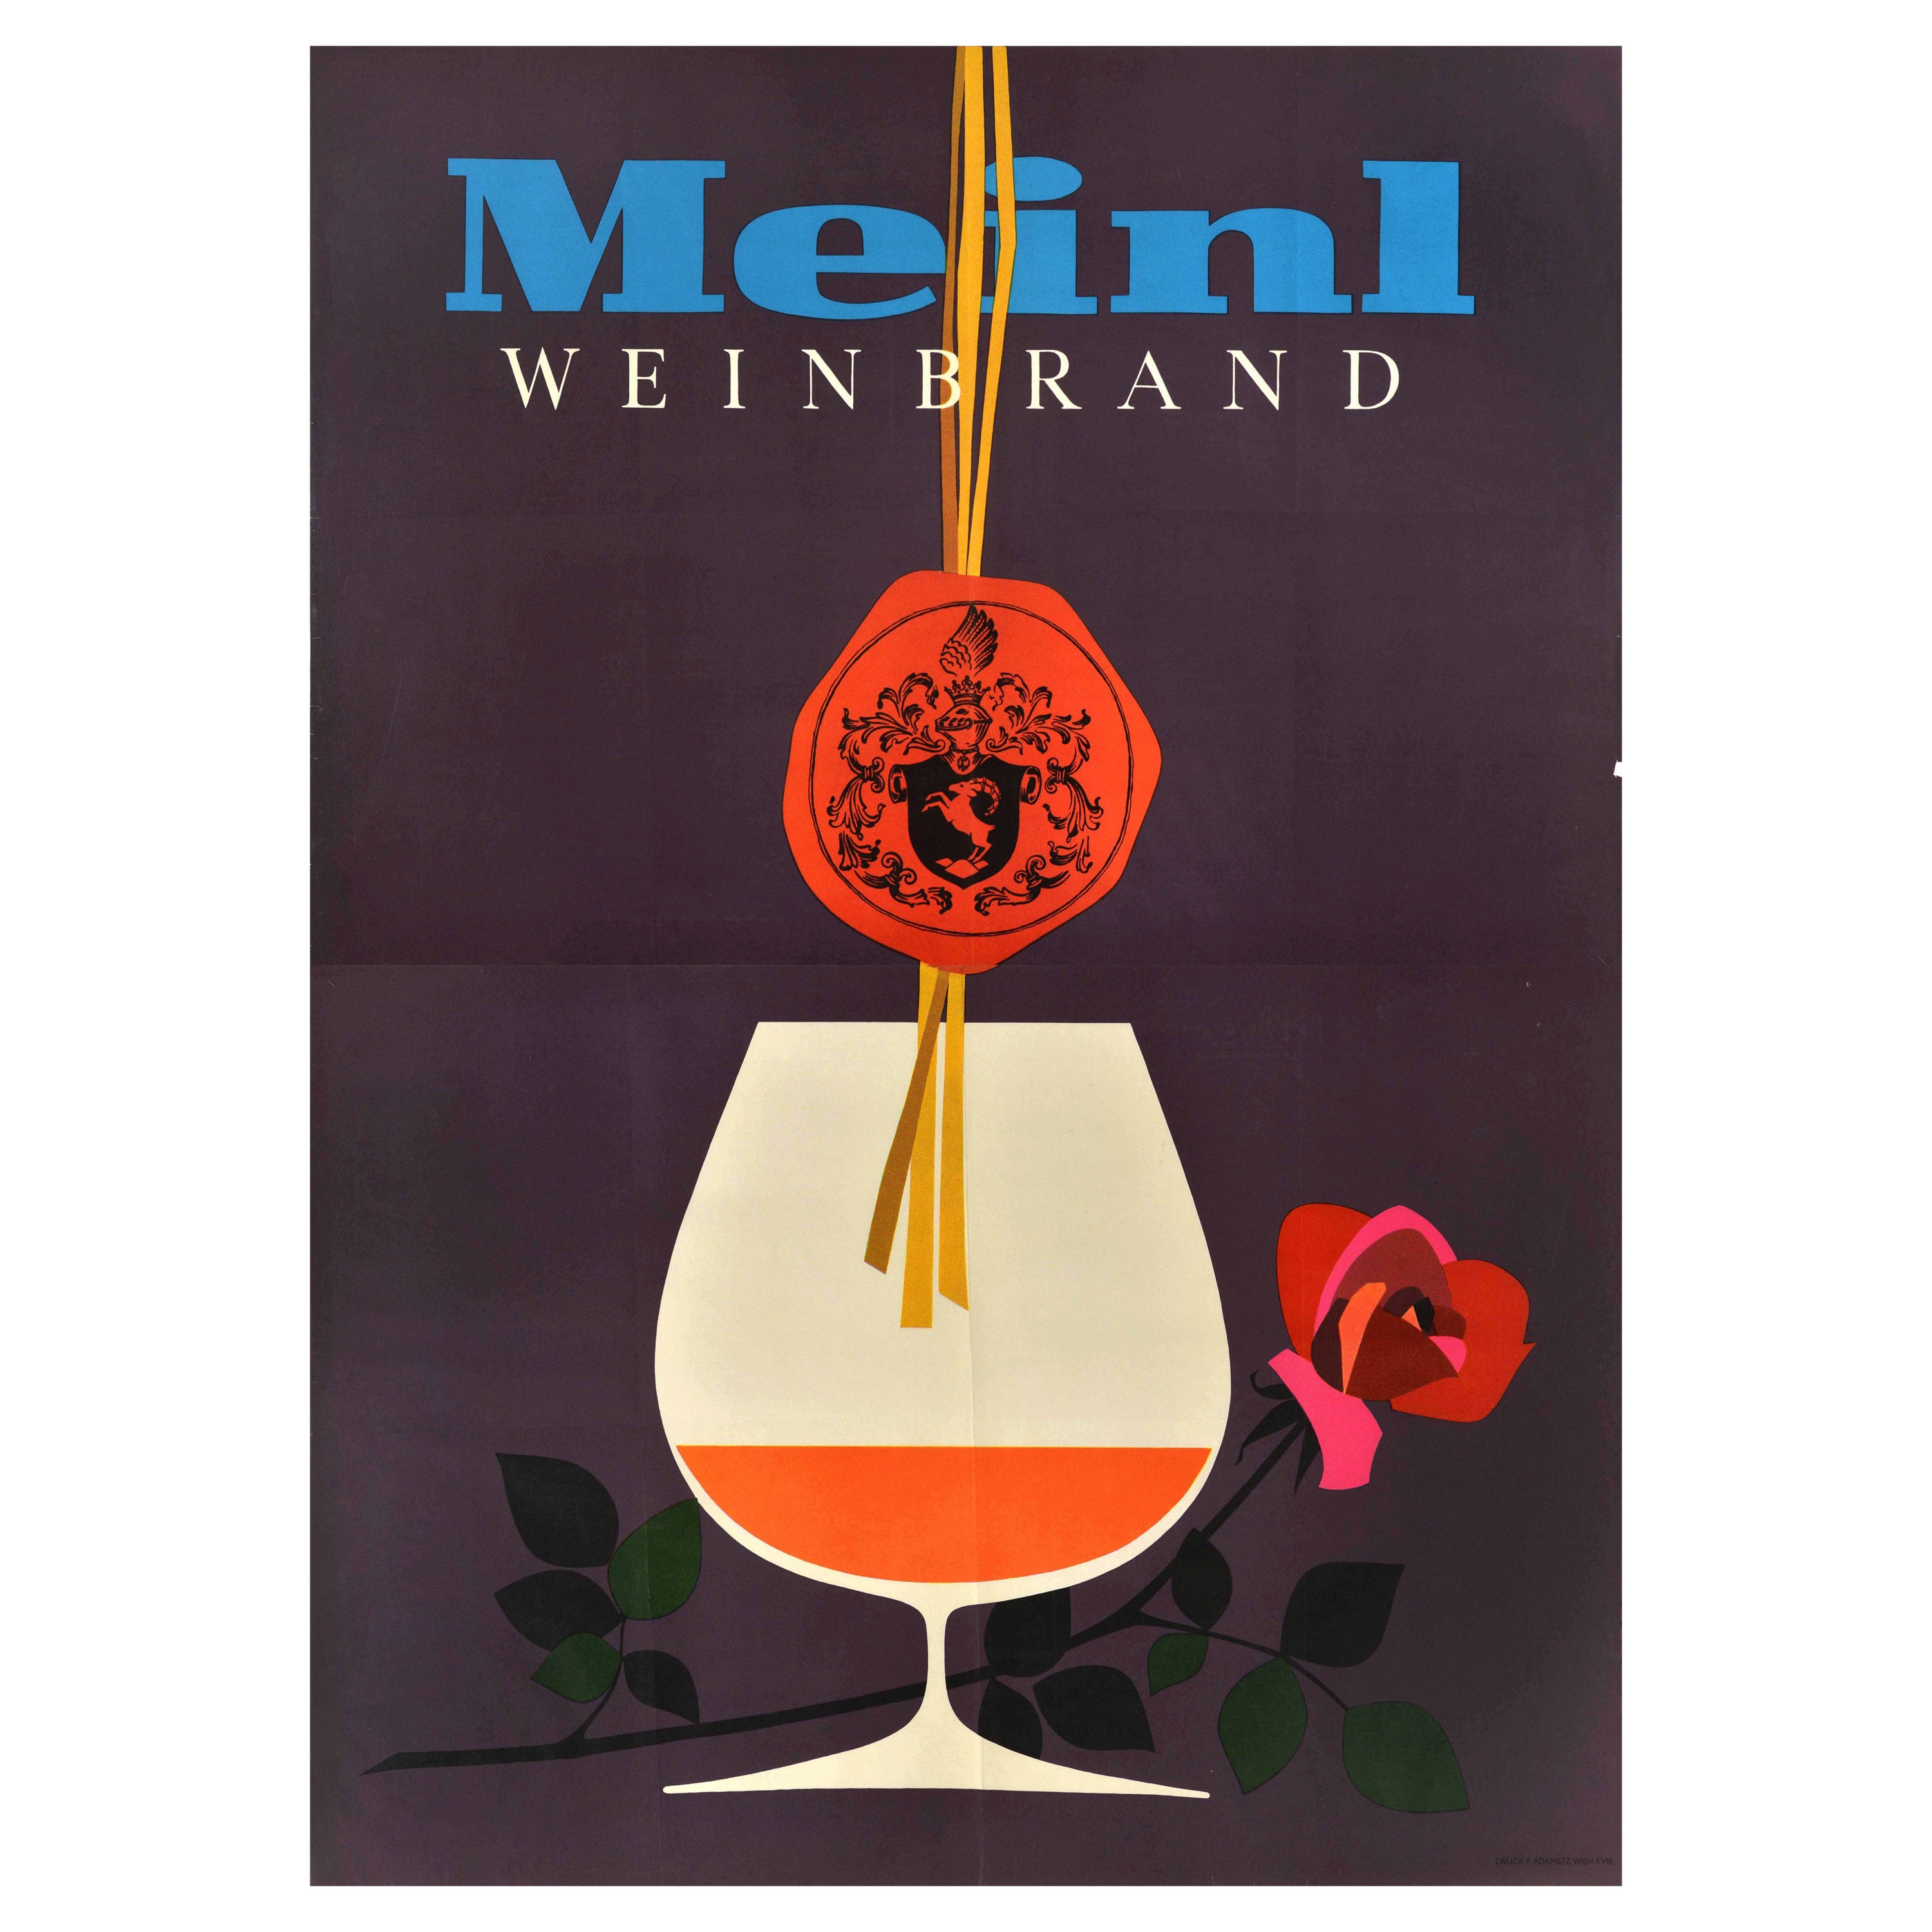 Original Vintage Drink Advertising Poster Meinl Weinbrand Brandy Cognac Alcohol